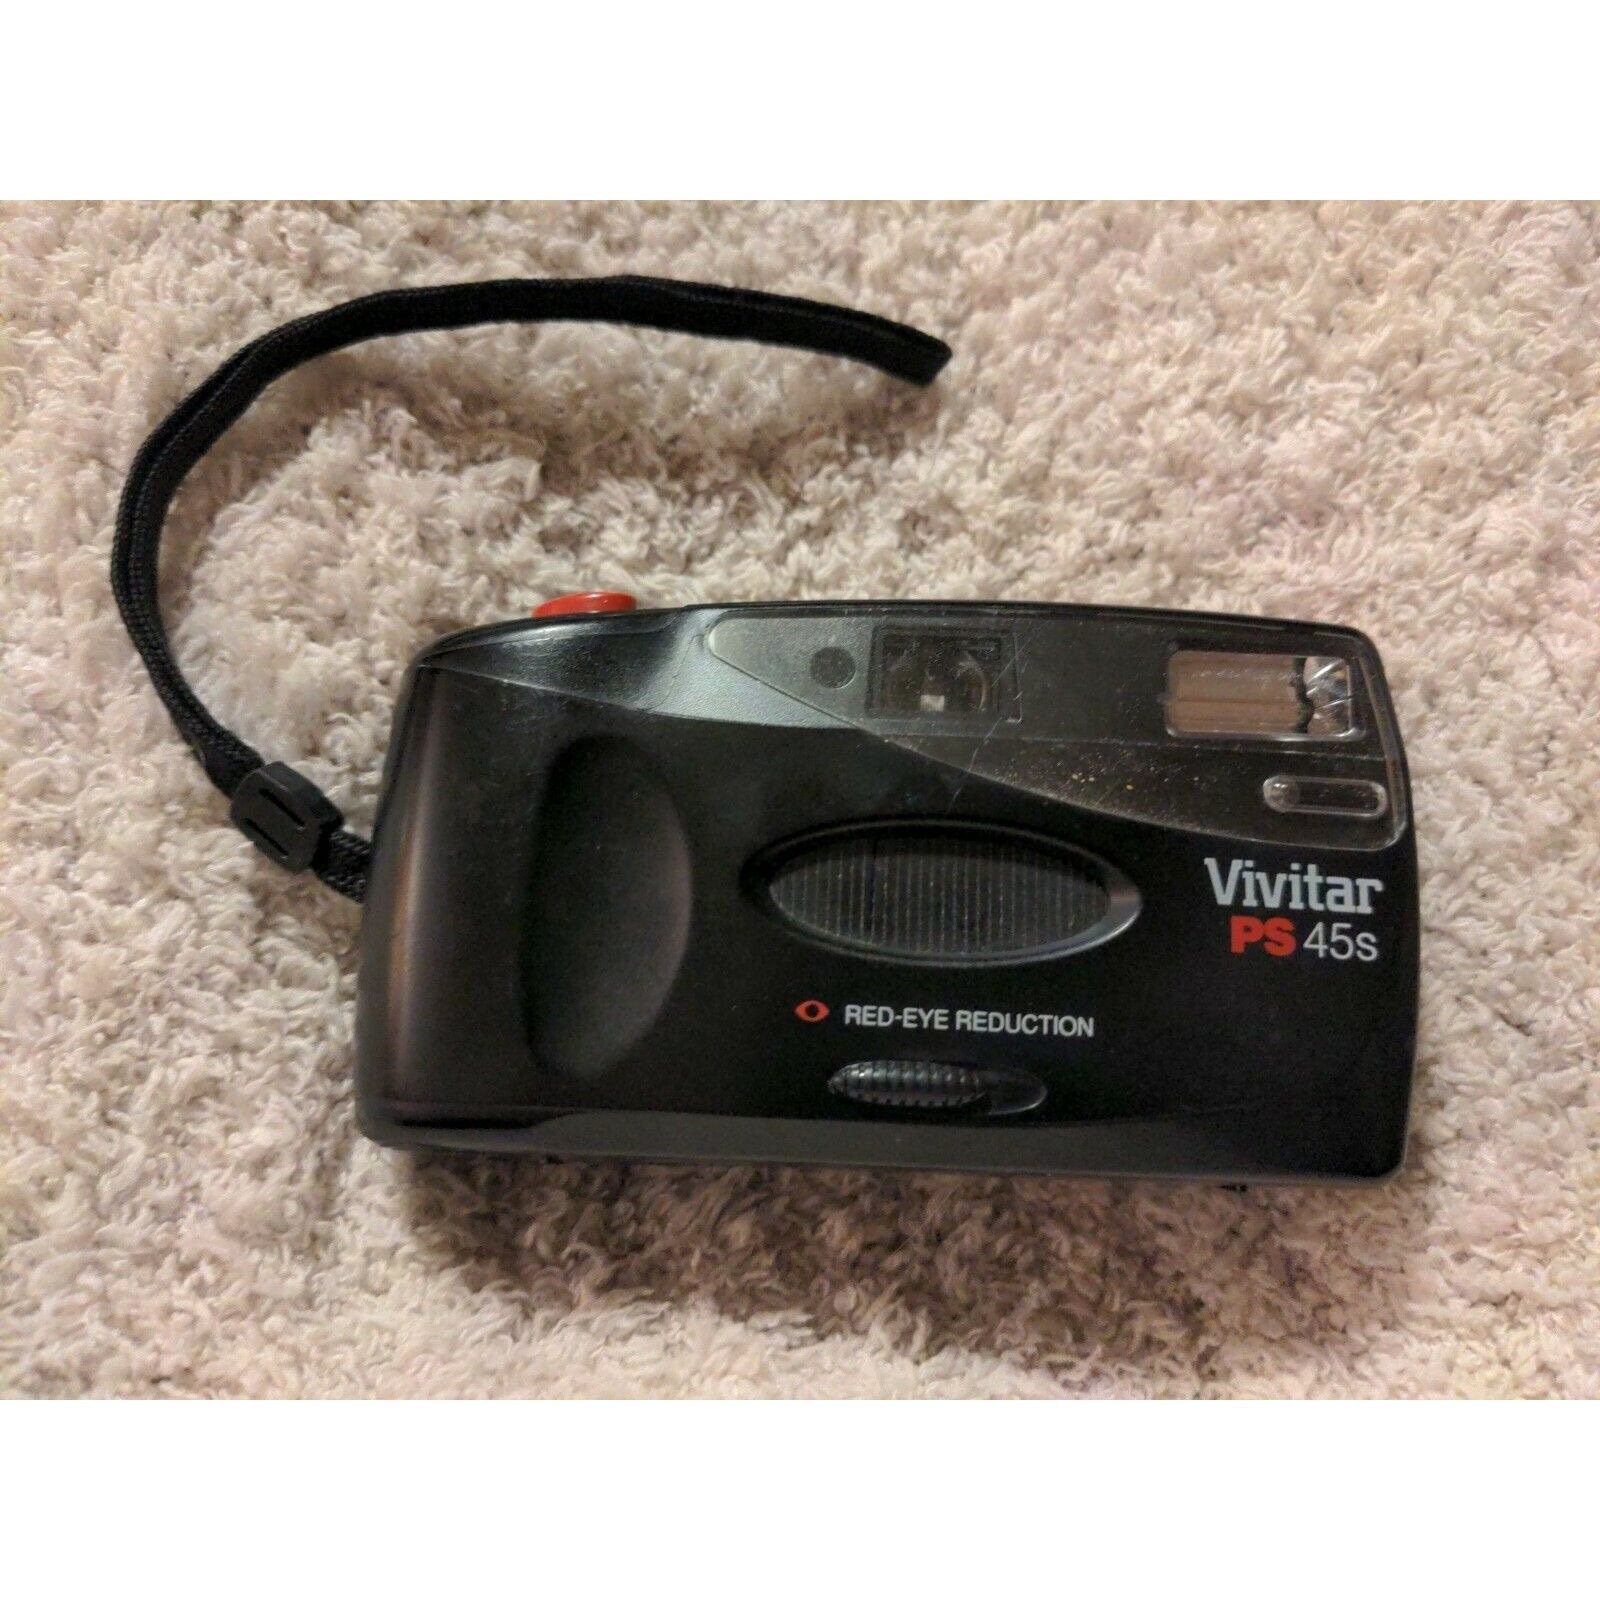 VIVITAR PS45S Camera * Focus-Free Auto Flash DX 35mm * Red-Eye Reduction * Film